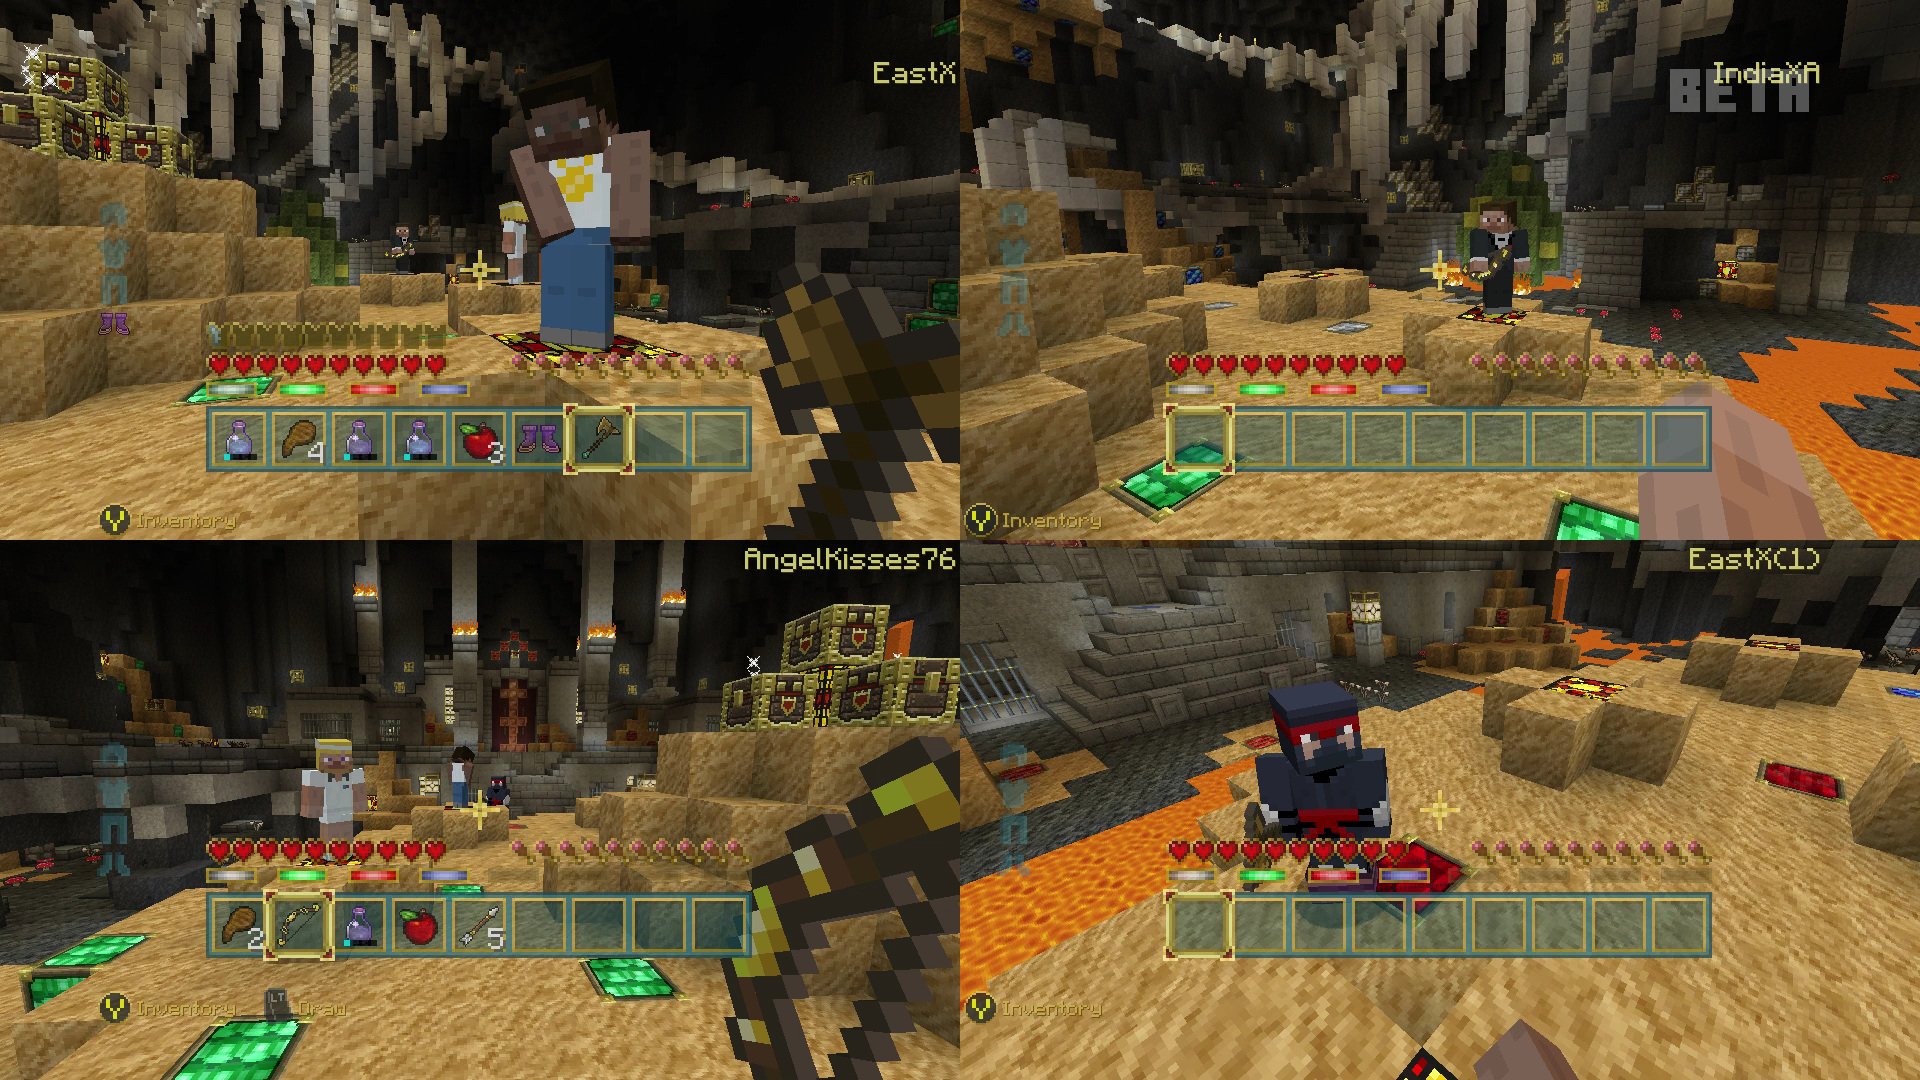 Minecraft Batalha Xbox Screen One Beta